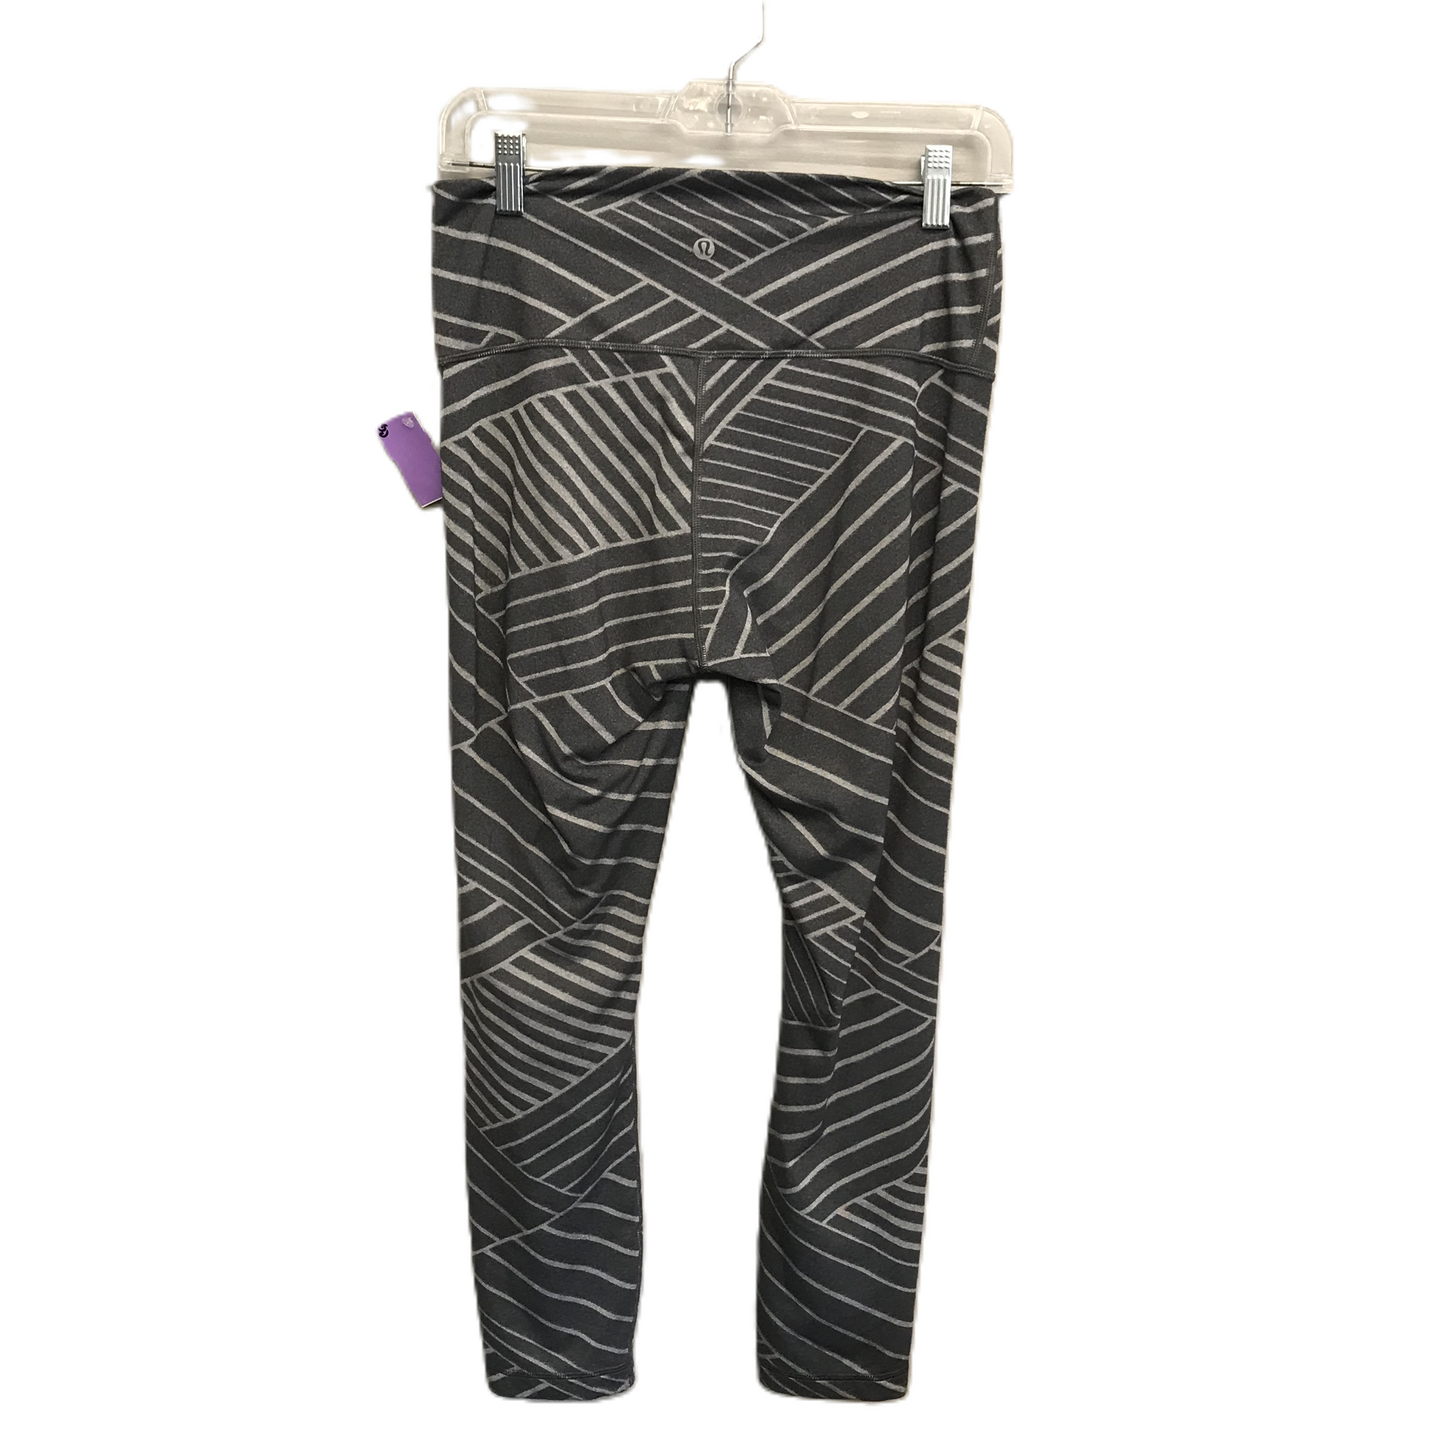 Grey Athletic Pants By Lululemon, Size: M